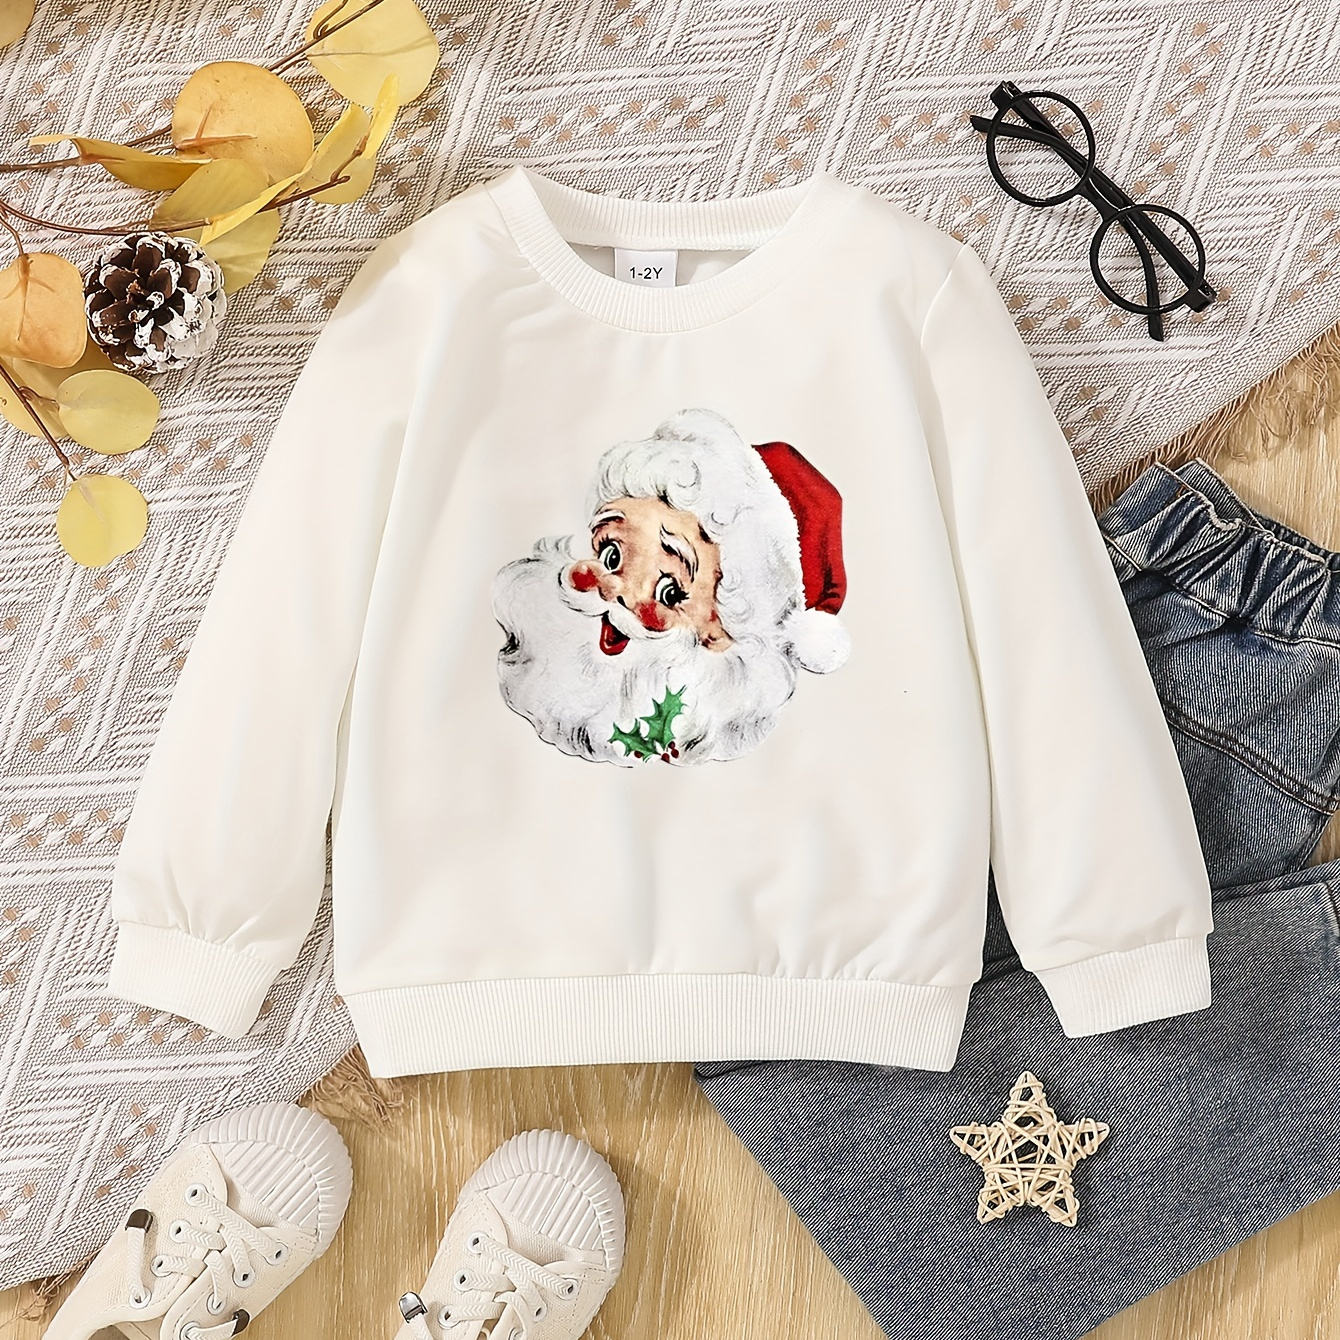 

Toddler Baby Girls Boys Cute Christmas Sweatshirt, Santa Claus Print Tops Long Sleeve Tee For Kids 1y-4y Festival Clothes